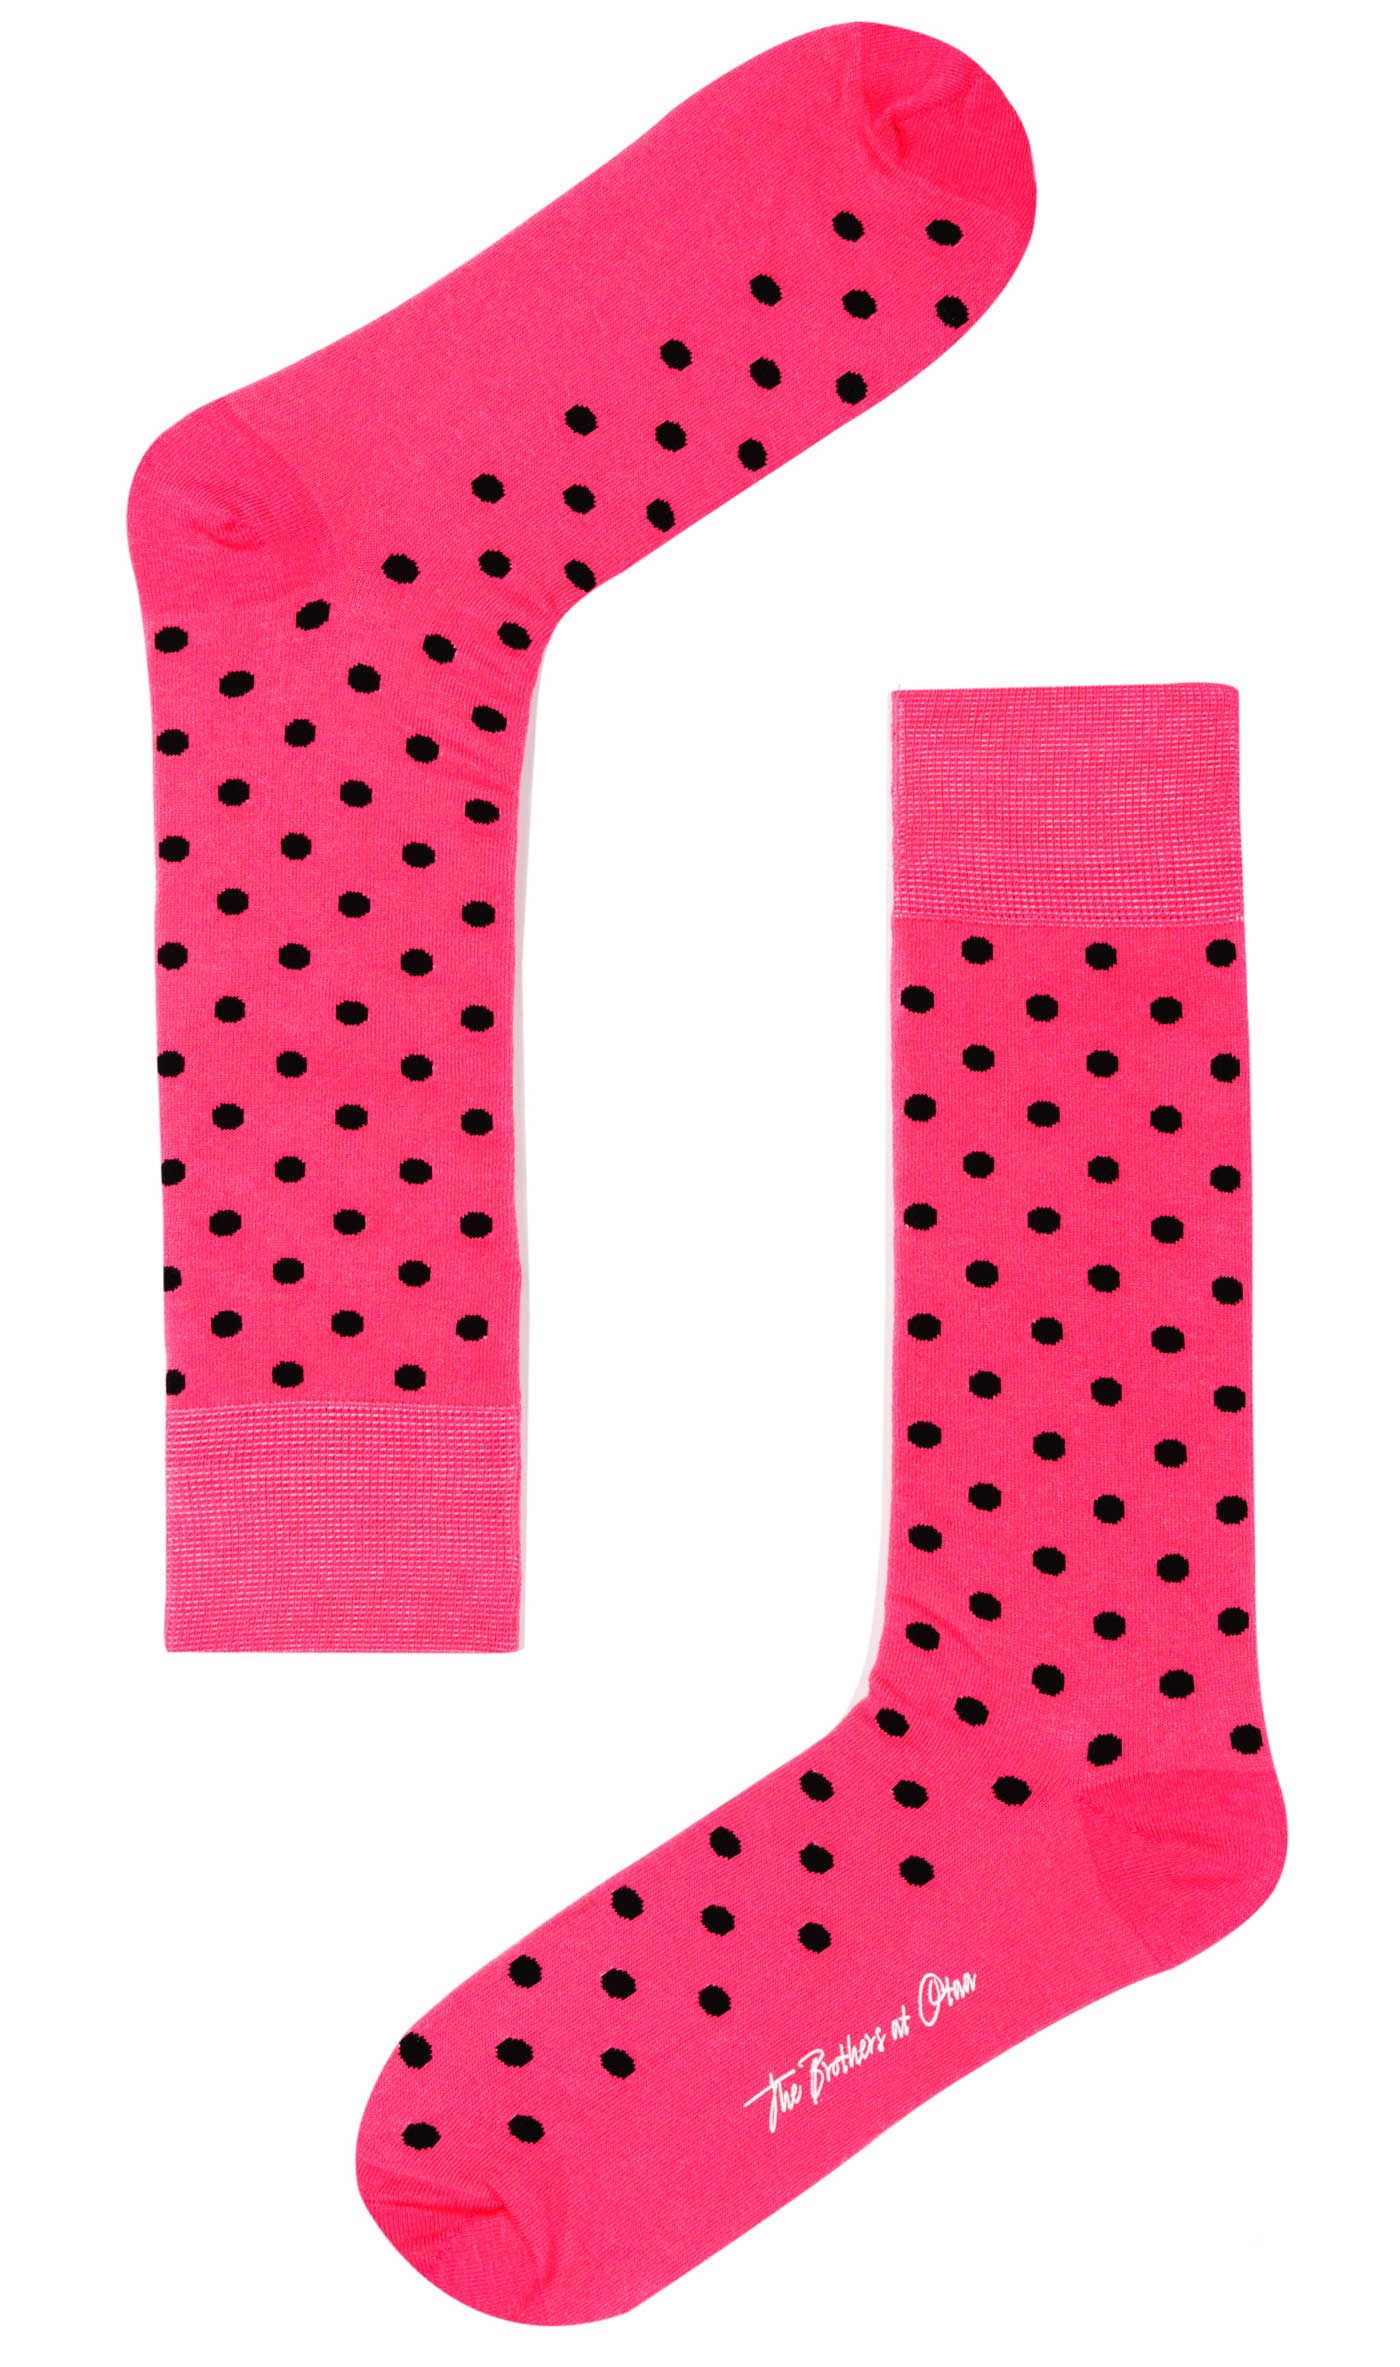 Hot Pink Dot Socks | Mens Happy Socks | Polka Dots Cotton Crew Sock | OTAA